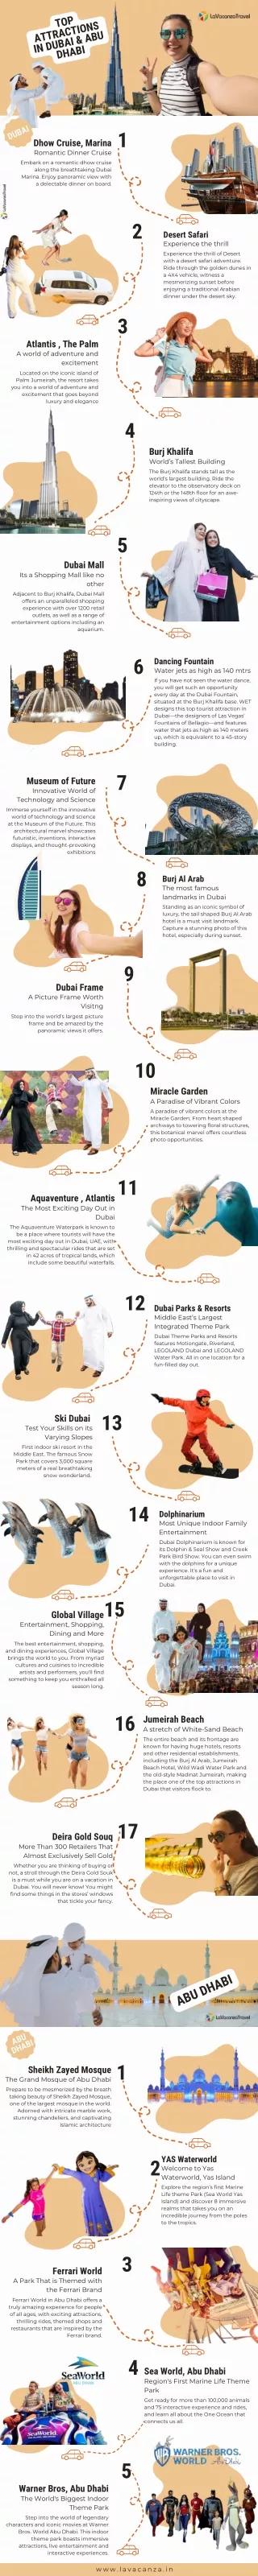 Infographic - Dubai and Abu Dhabi Top Attractions